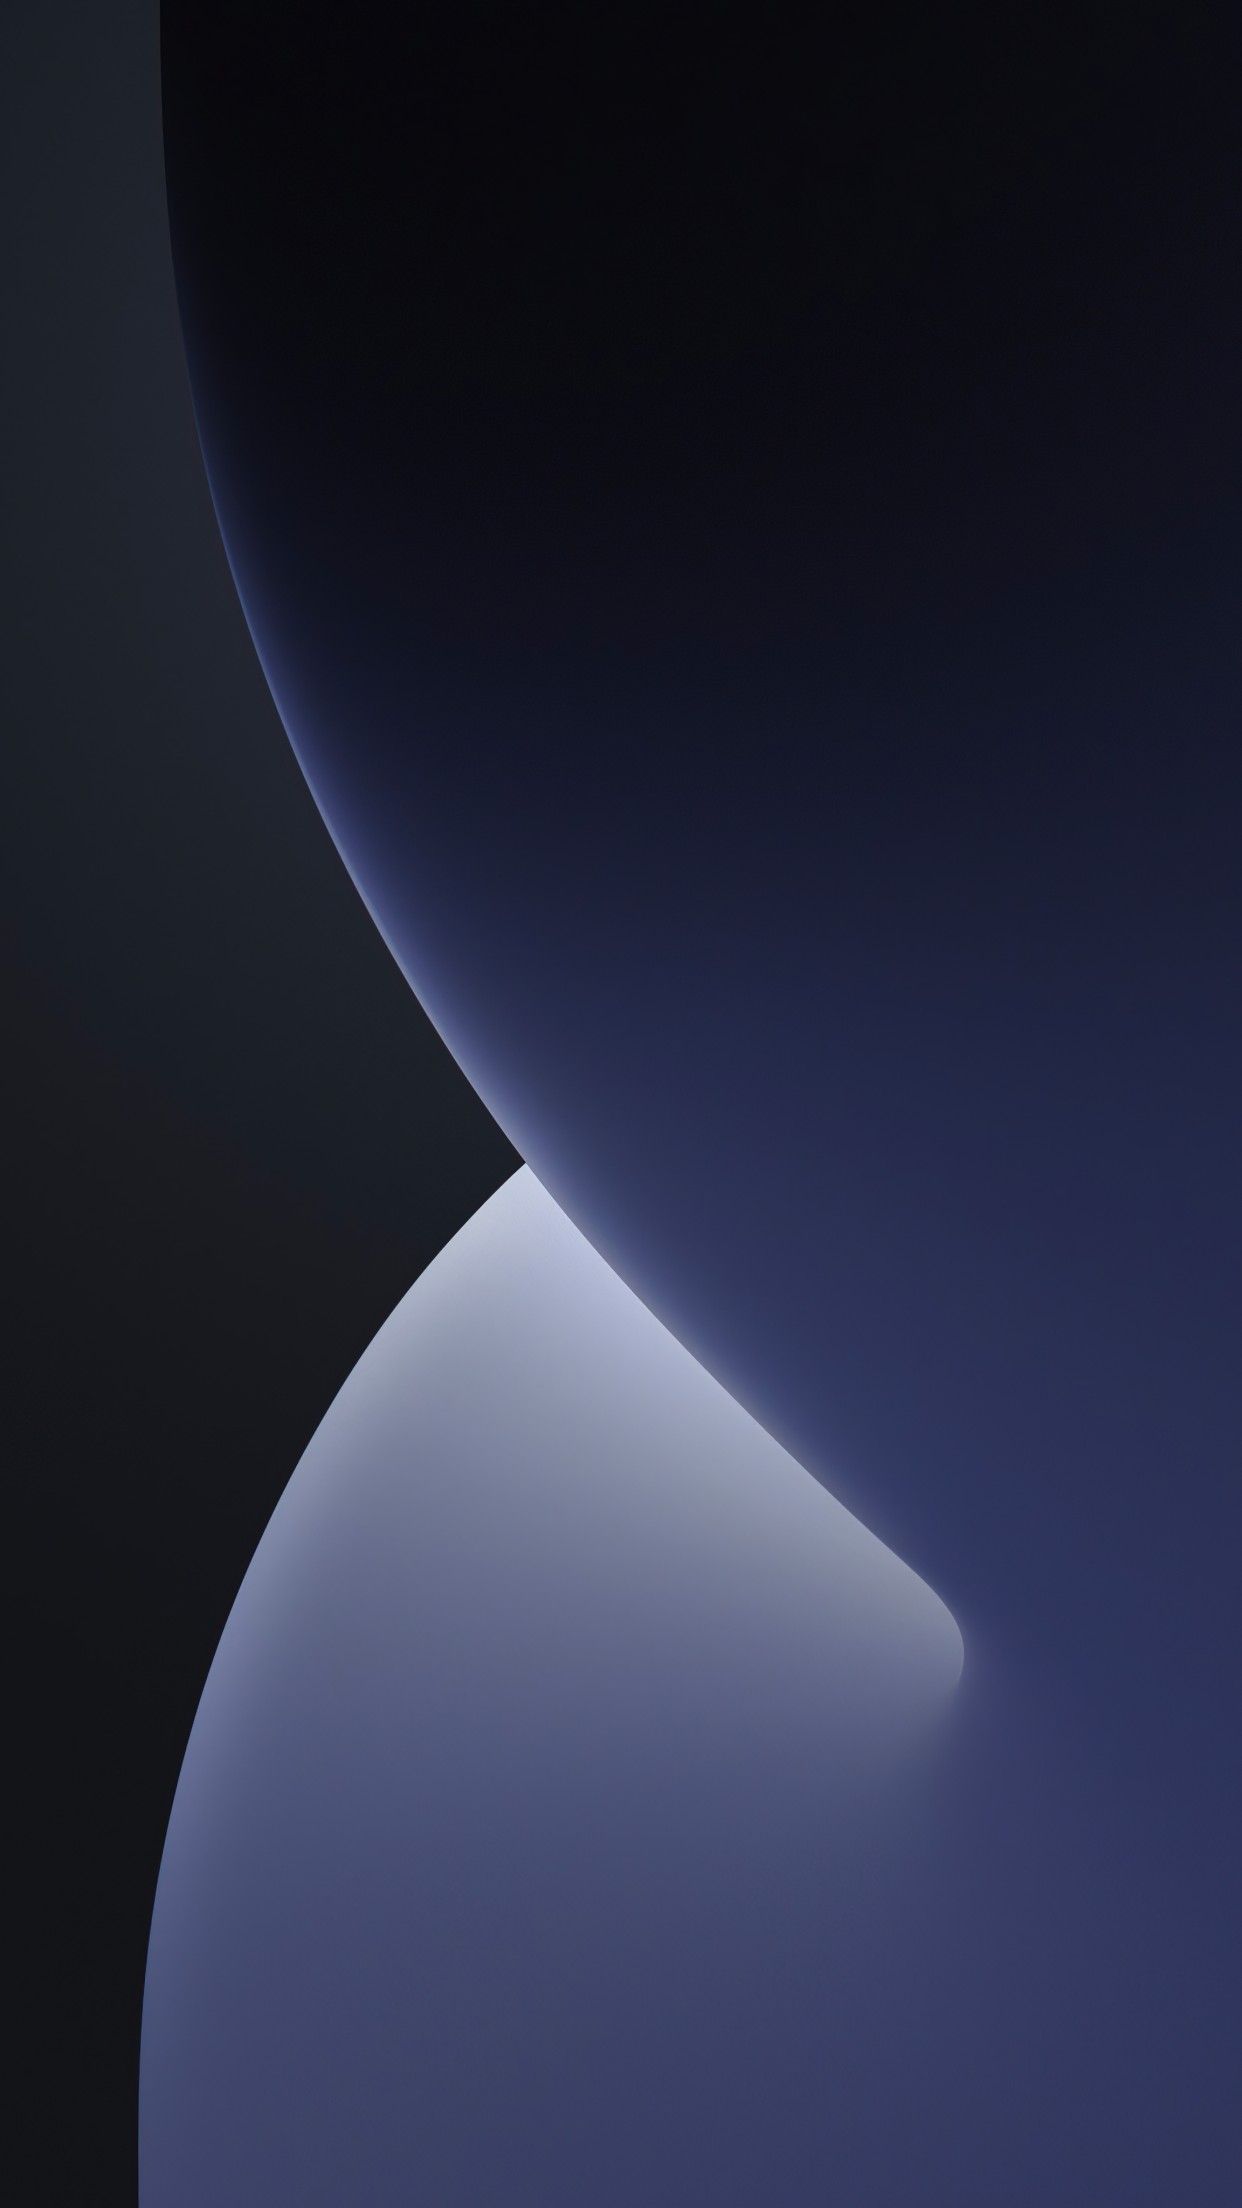 iOS 14 4K Wallpaper, WWDC, 2020, iPhone 12, iPadOS, Dark, Grey, Stock, Black /Dark,